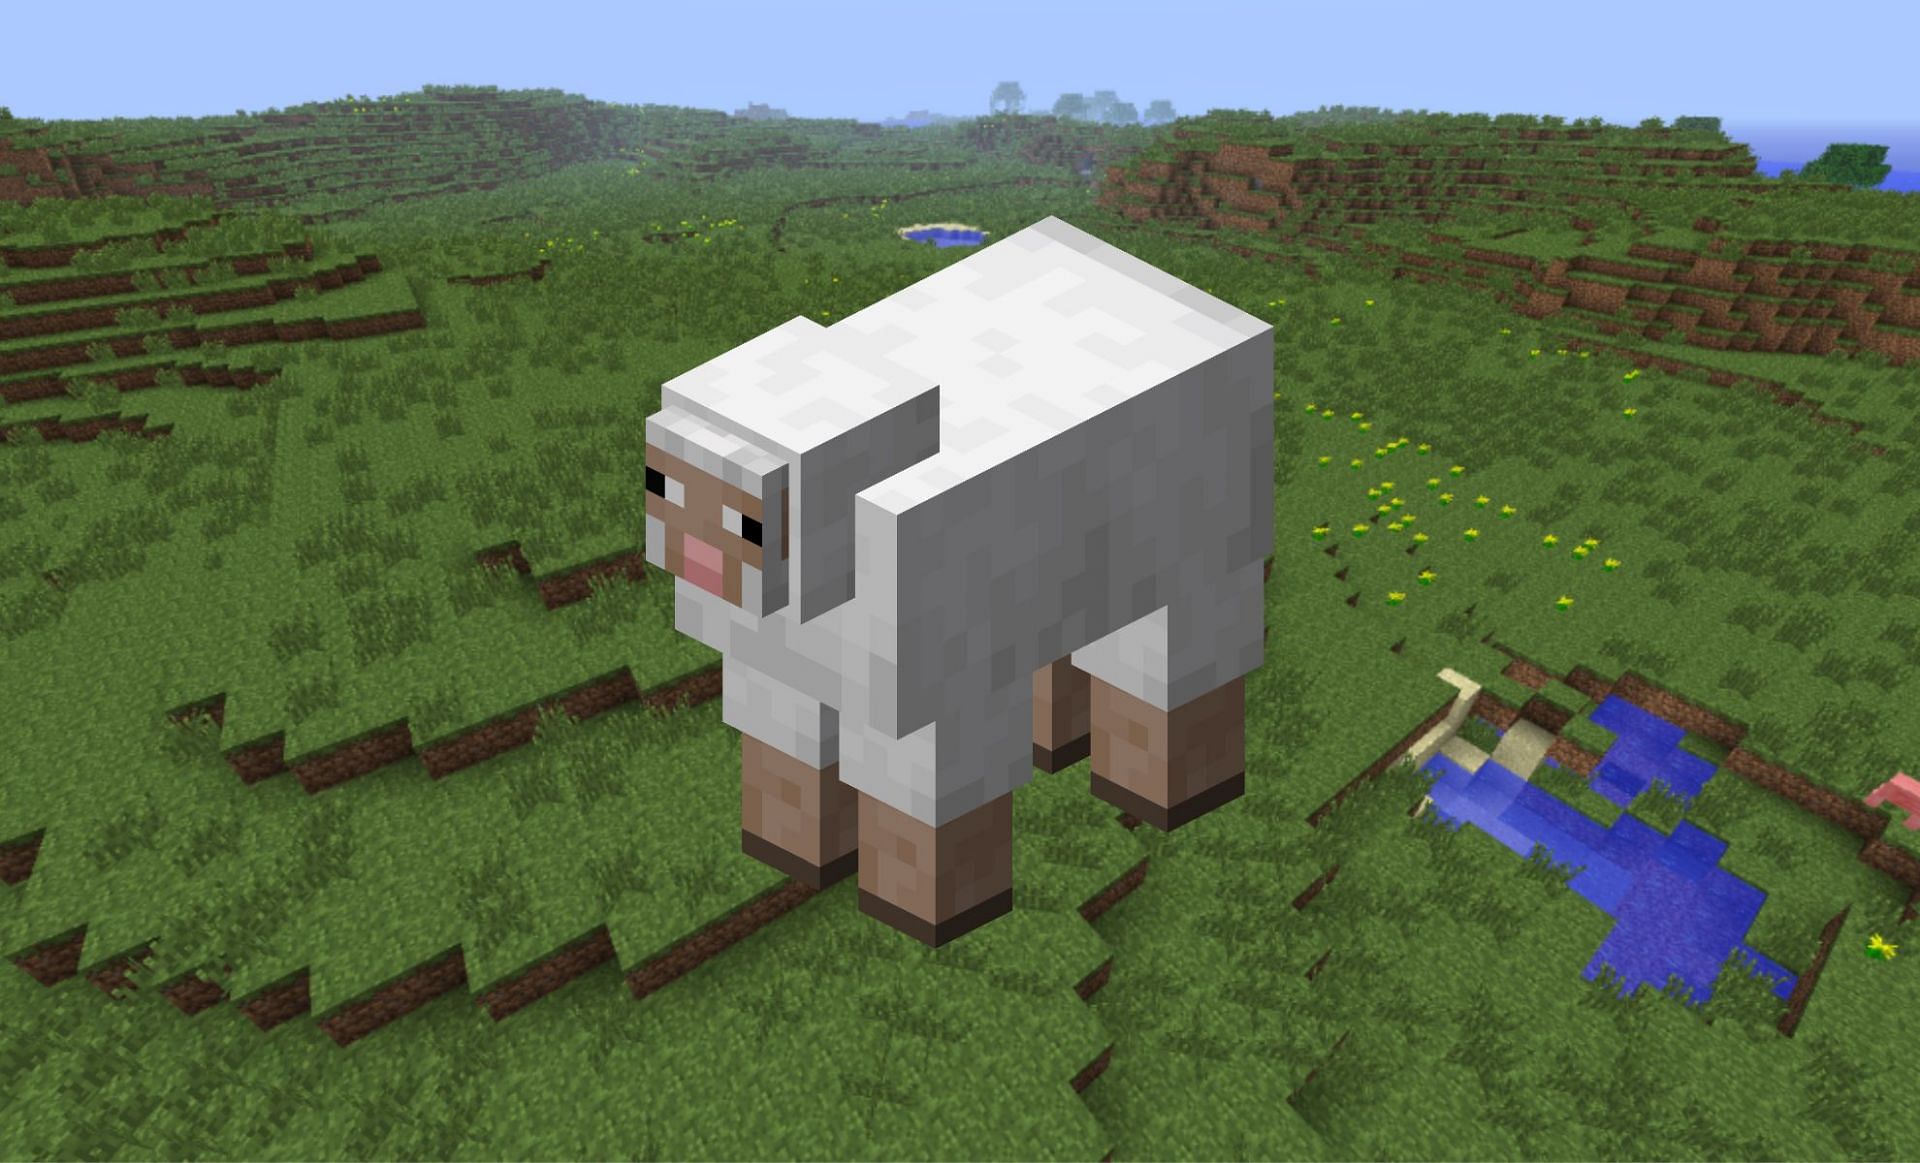 Sheep are a popular mob and often get skins (Image via Mojang)